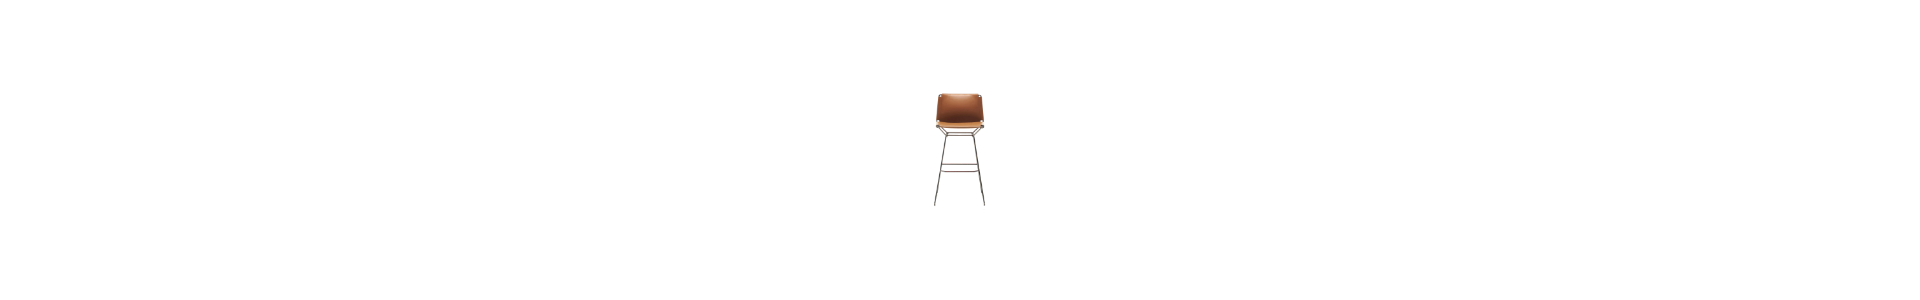 Leather stools